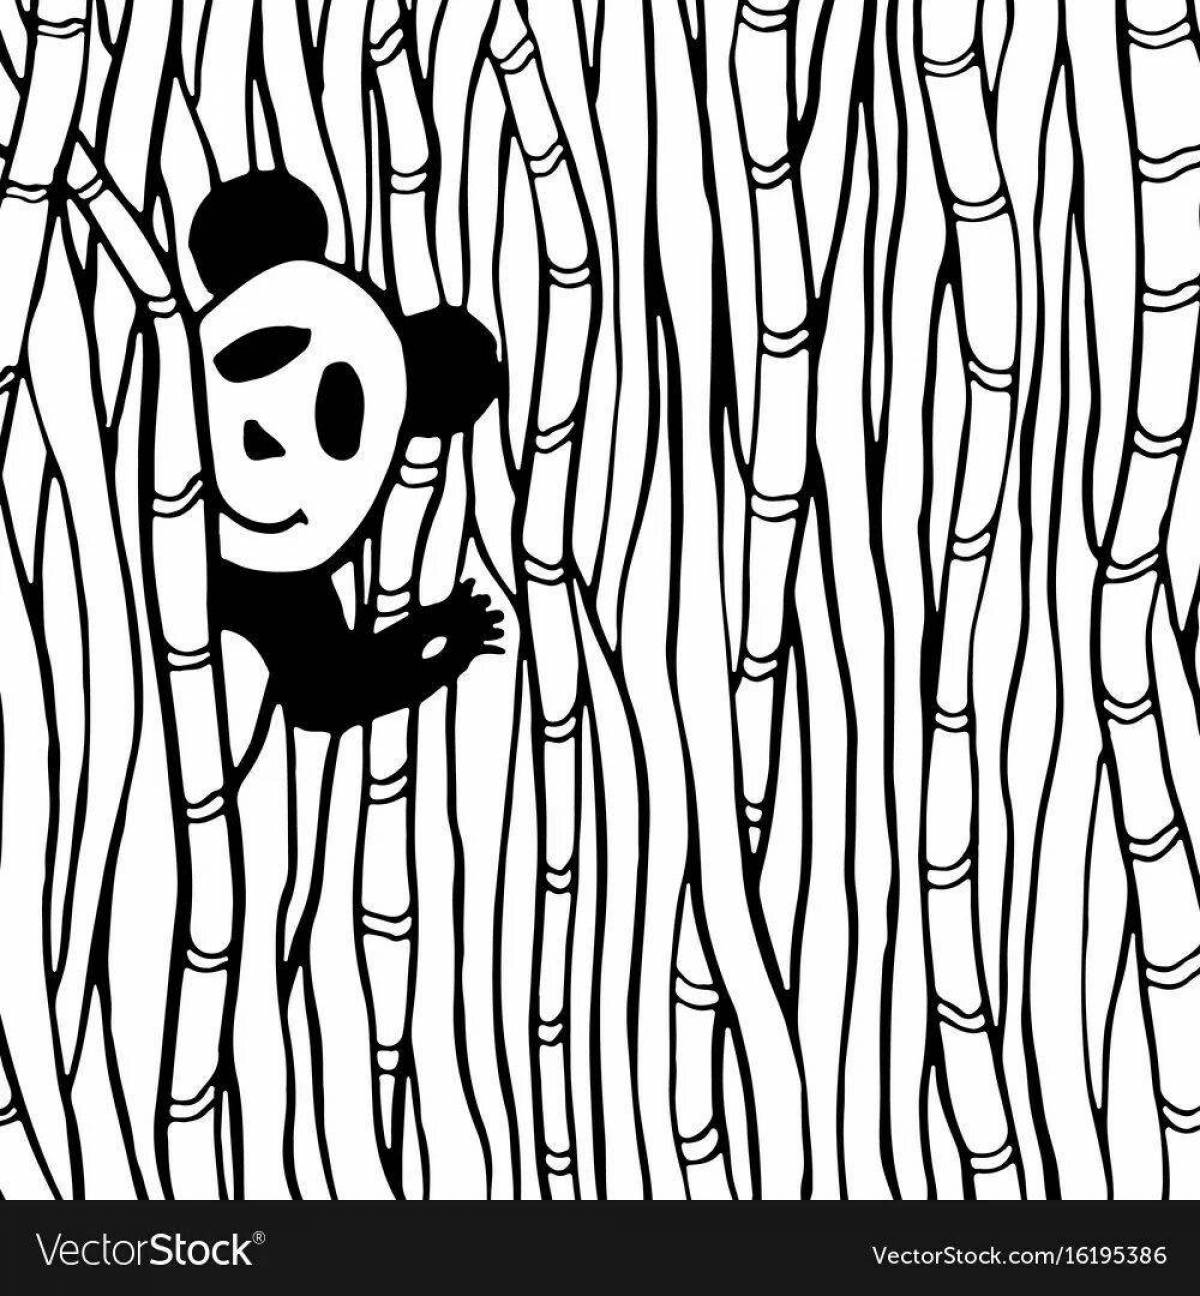 Living panda coloring book with bamboo